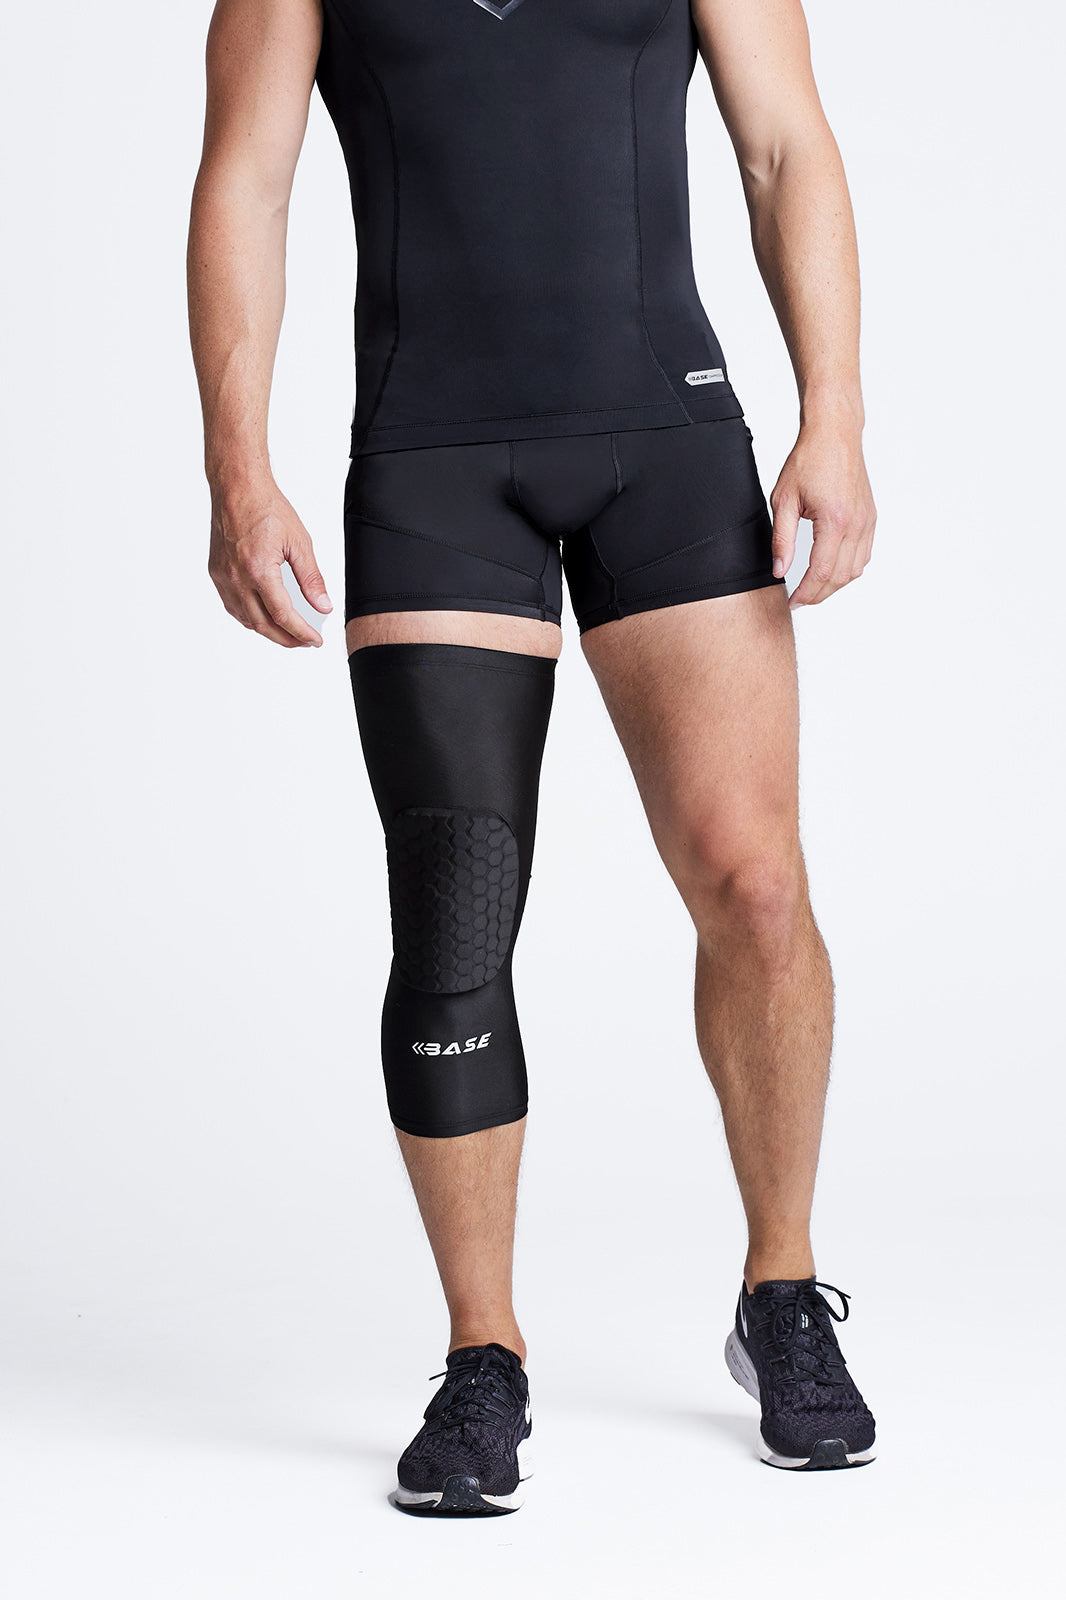 Right leg compression bottom – Basebroz